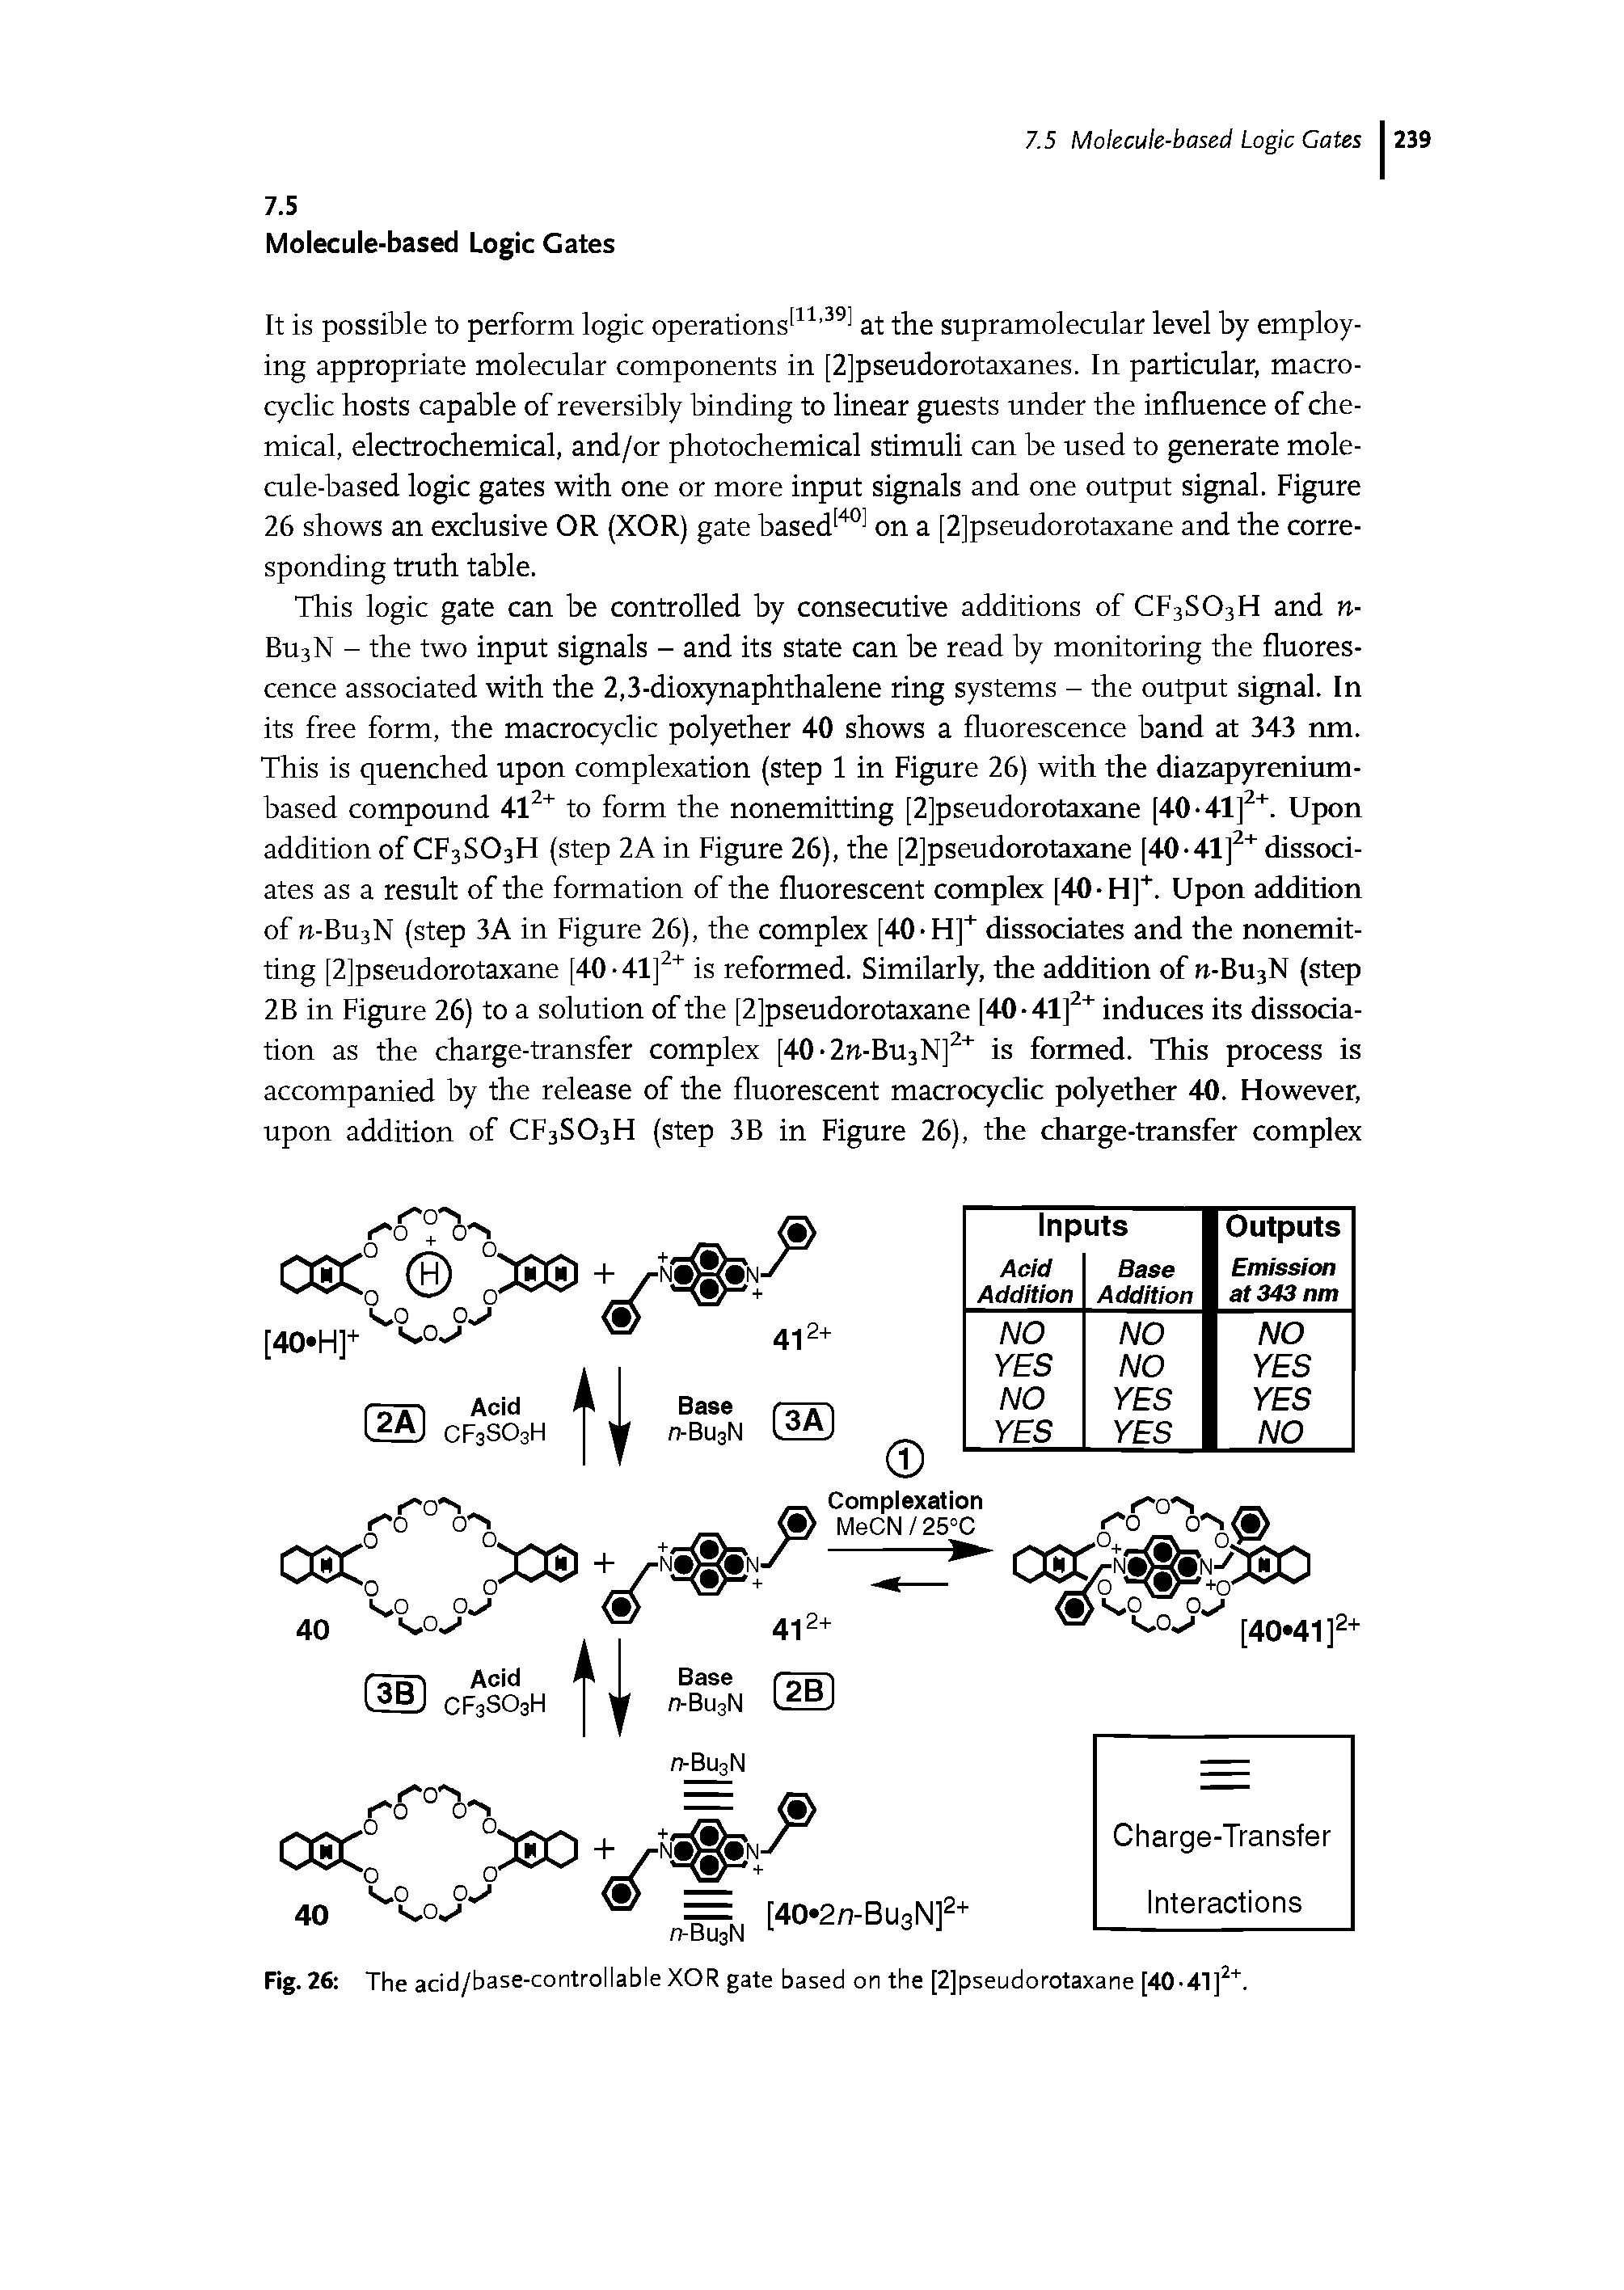 Fig. 26 The acid/base-controllable XOR gate based on the [2]pseudorotaxane [40-41]2+.